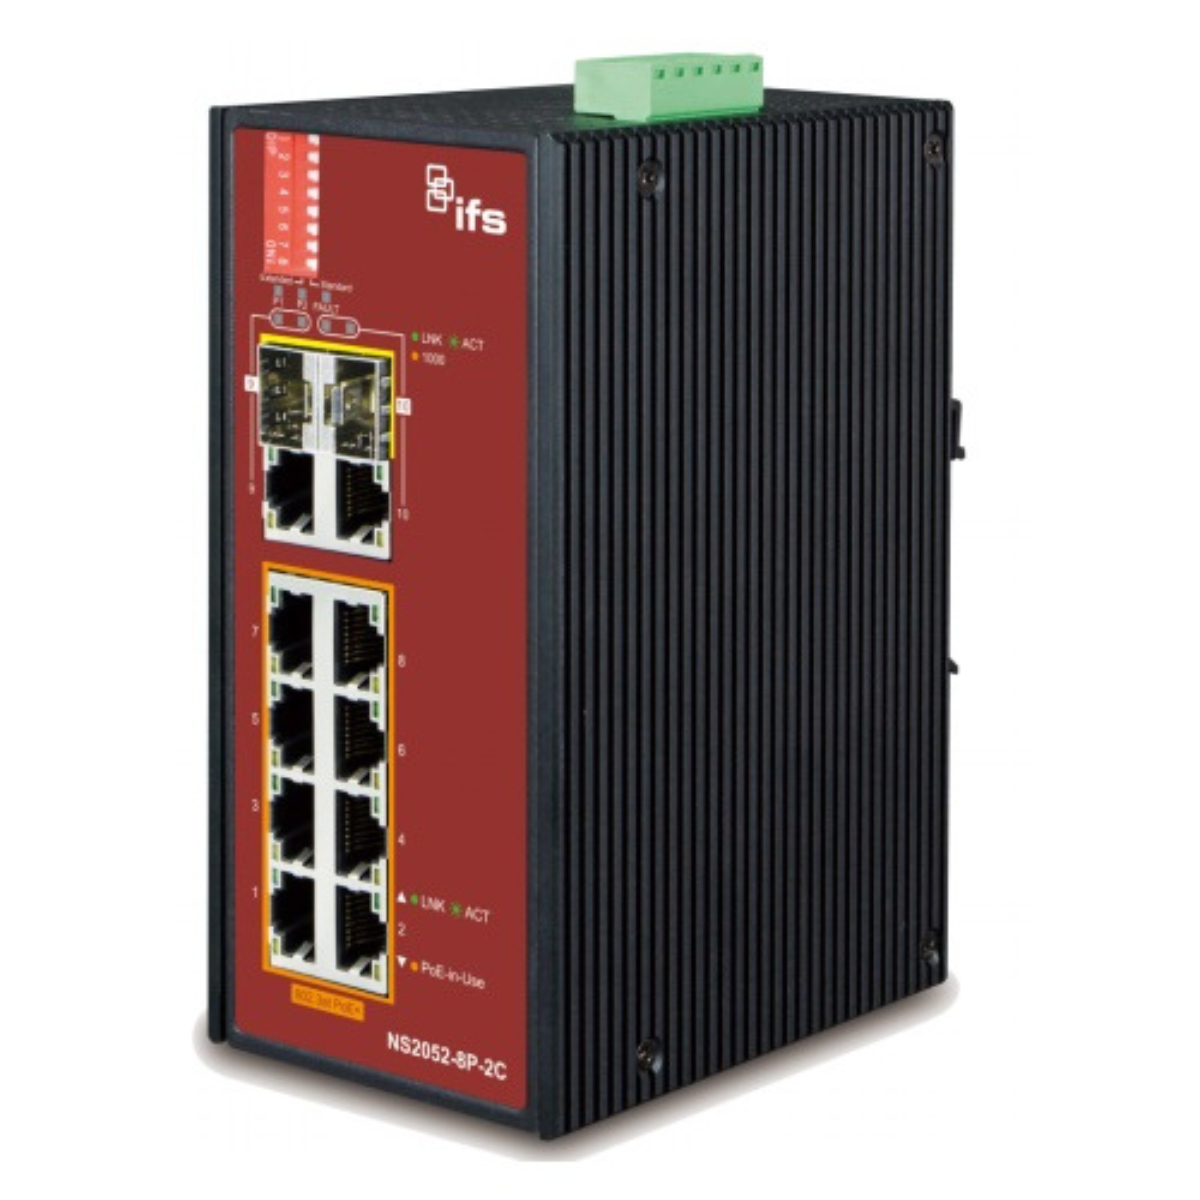 8-port PoE Unmanaged Industrial Ethernet Switch with 2 x RJ45/SFP Gigabit uplink combo
ports